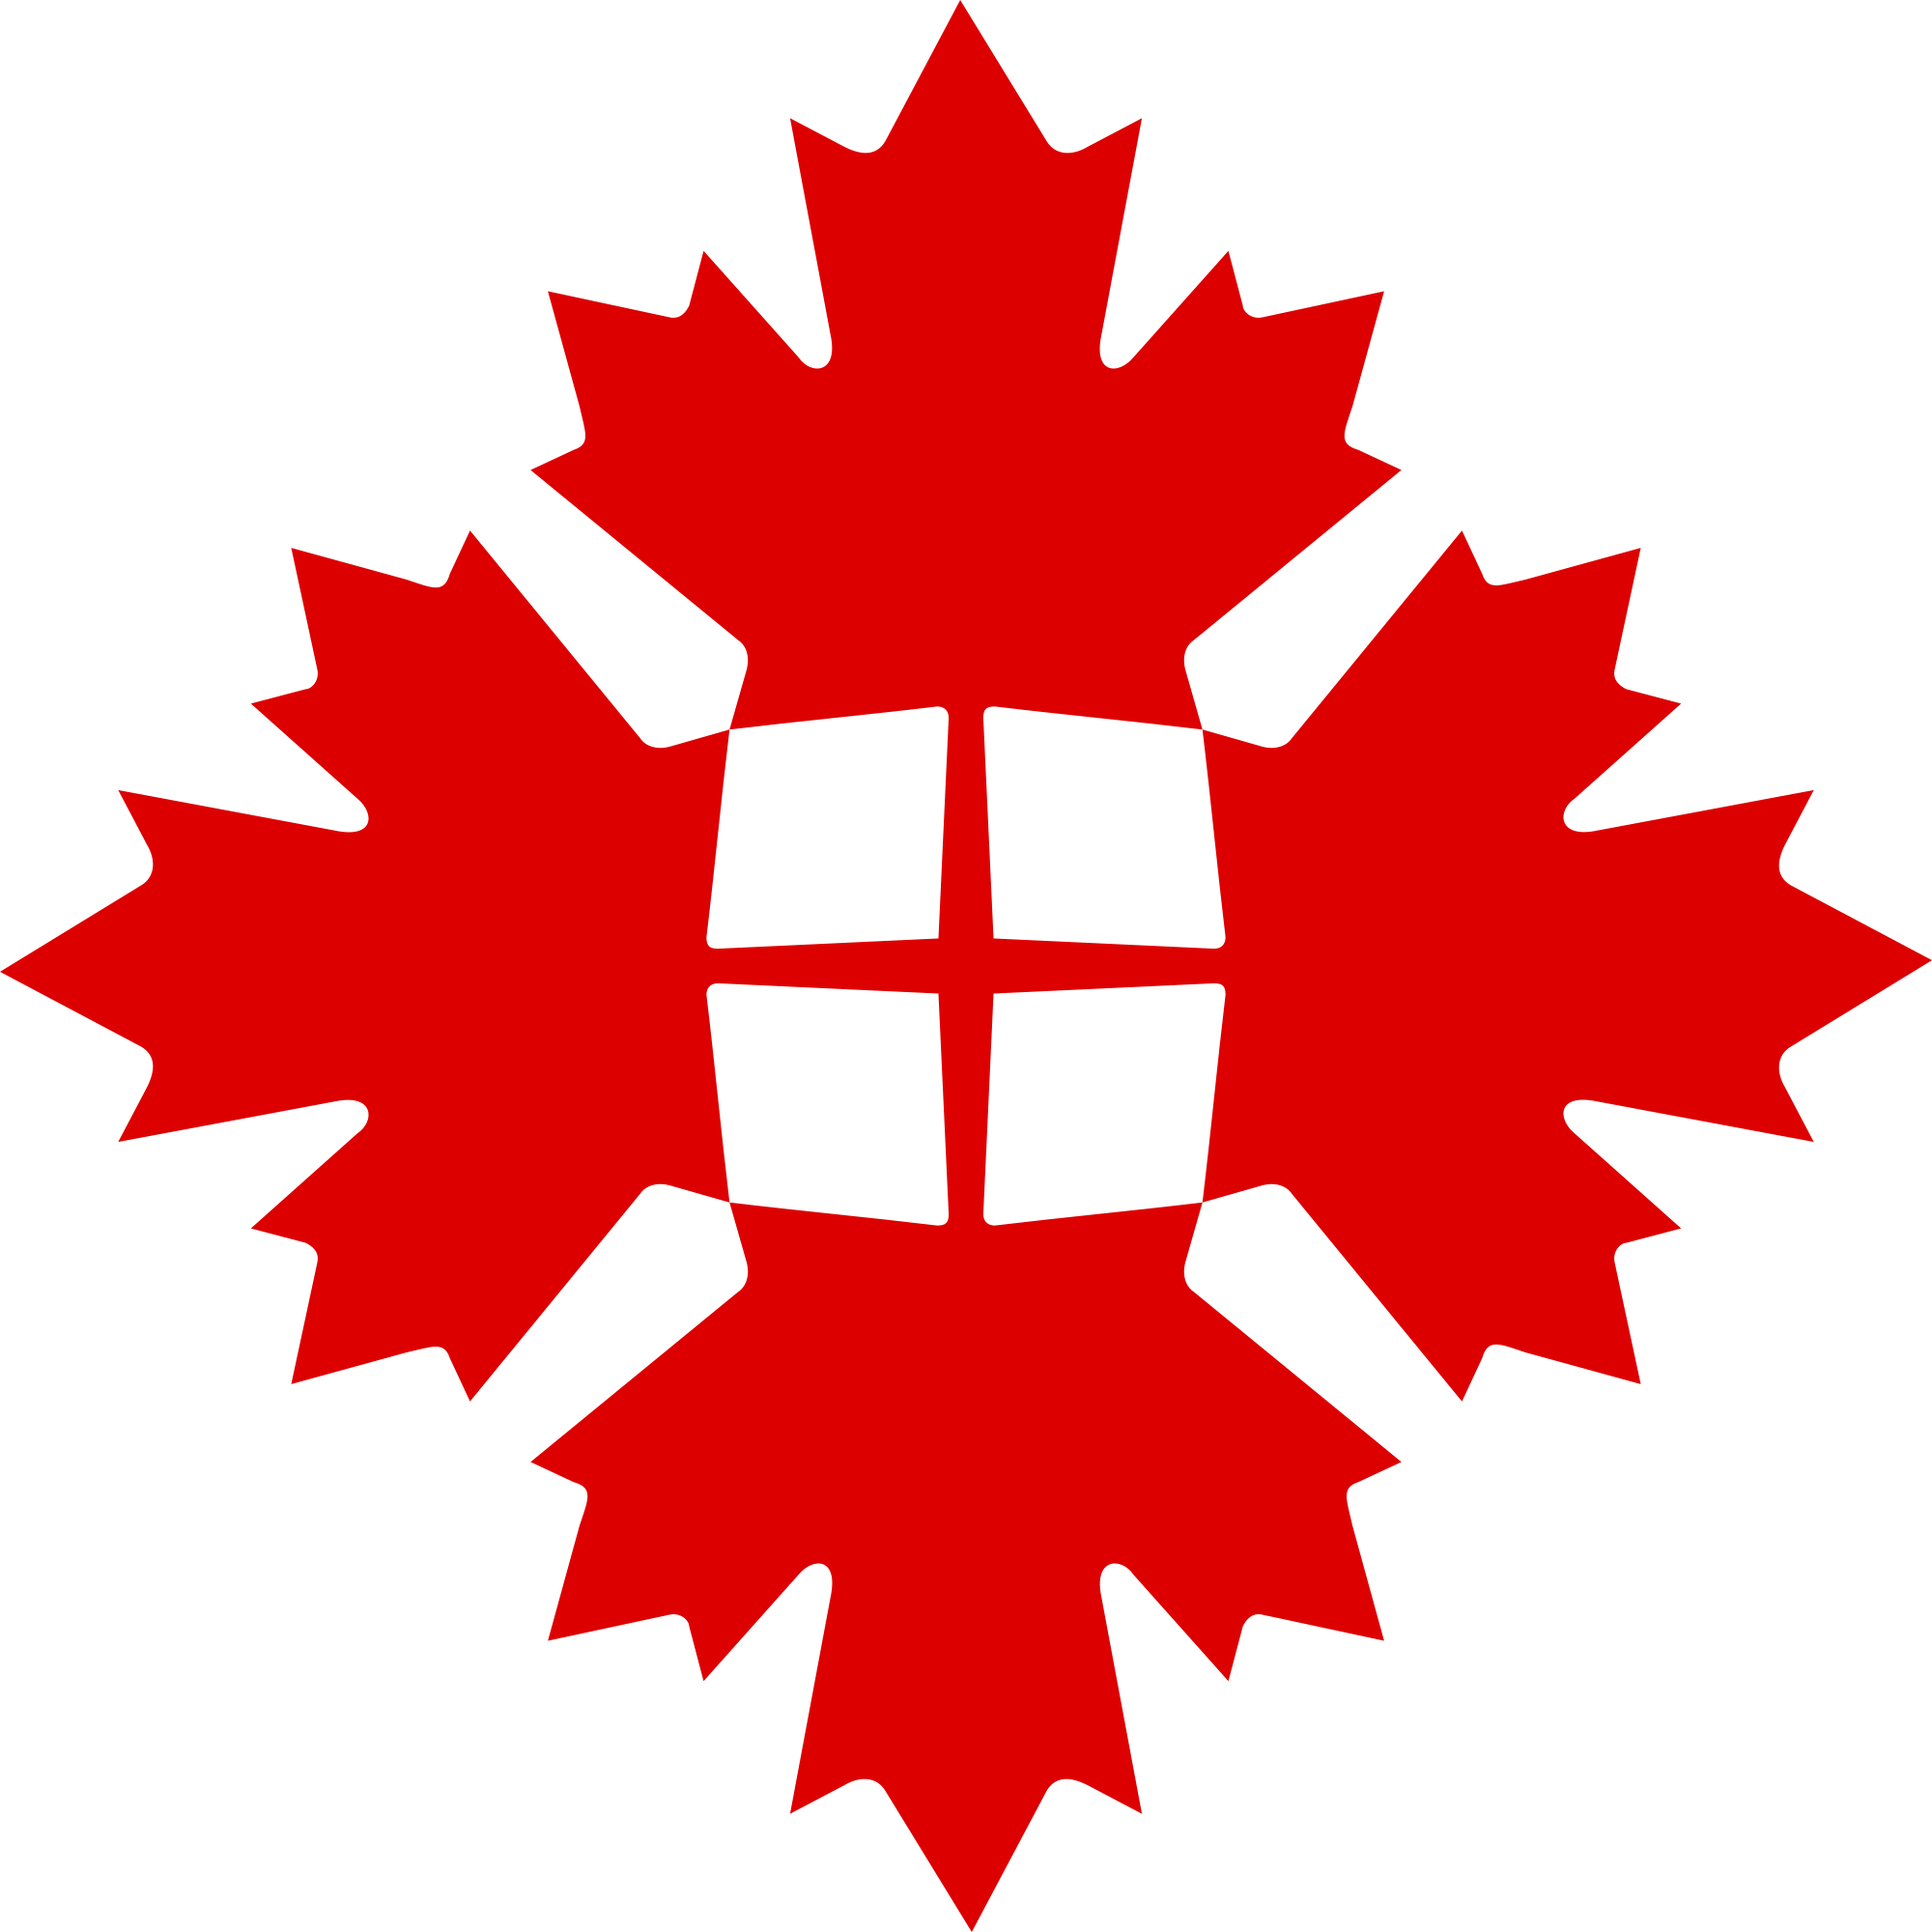 Fileheraldic Mark Of The Prime Minister Of Canadag - Brand Felt Ltd Canada (2000x2000)